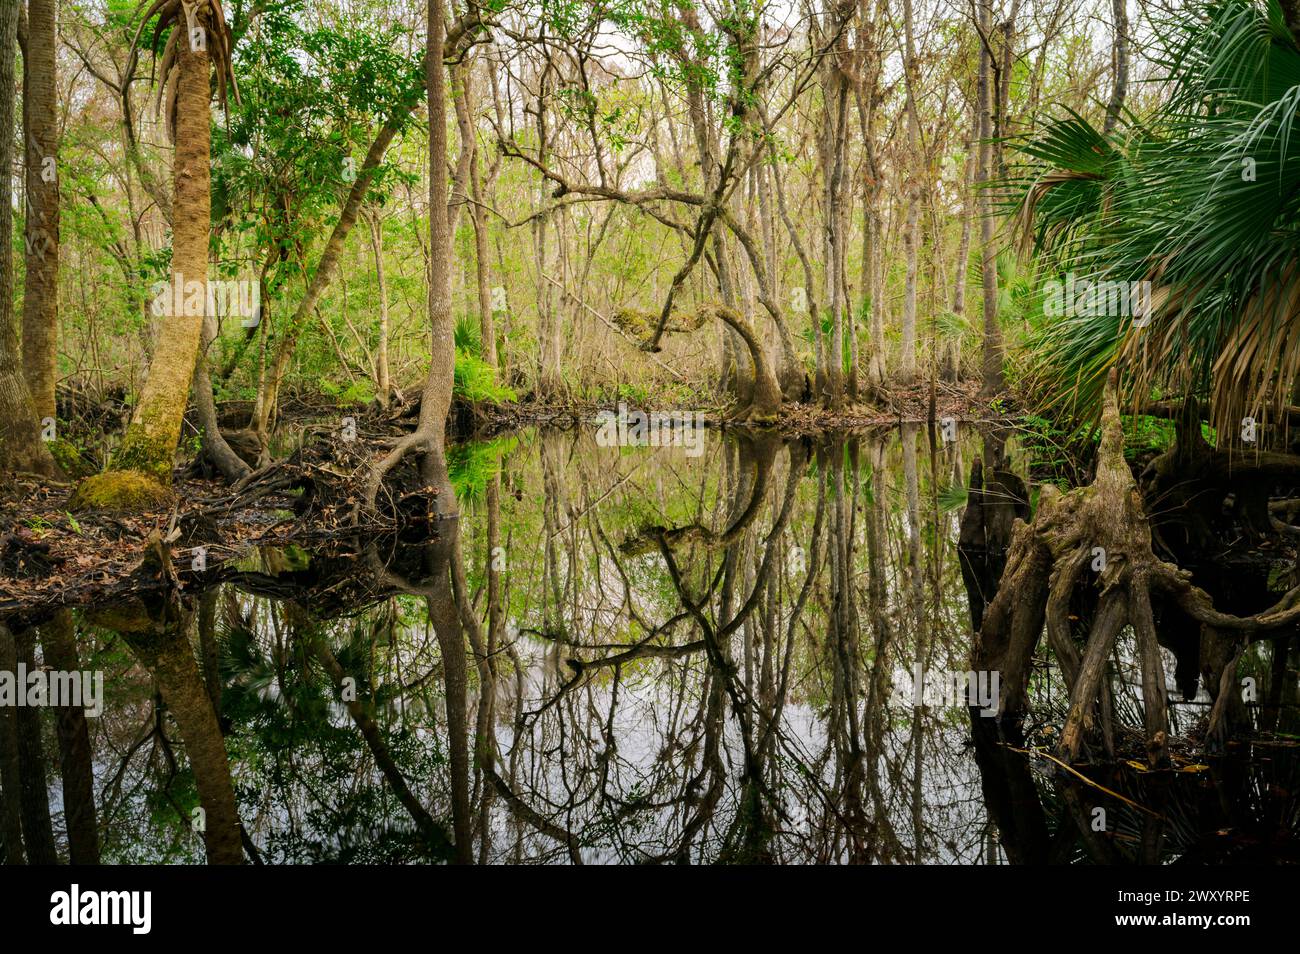 Zypressenwald im Sumpfgebiet des Lake Norris Conservationa Area, Florida, USA. Stockfoto